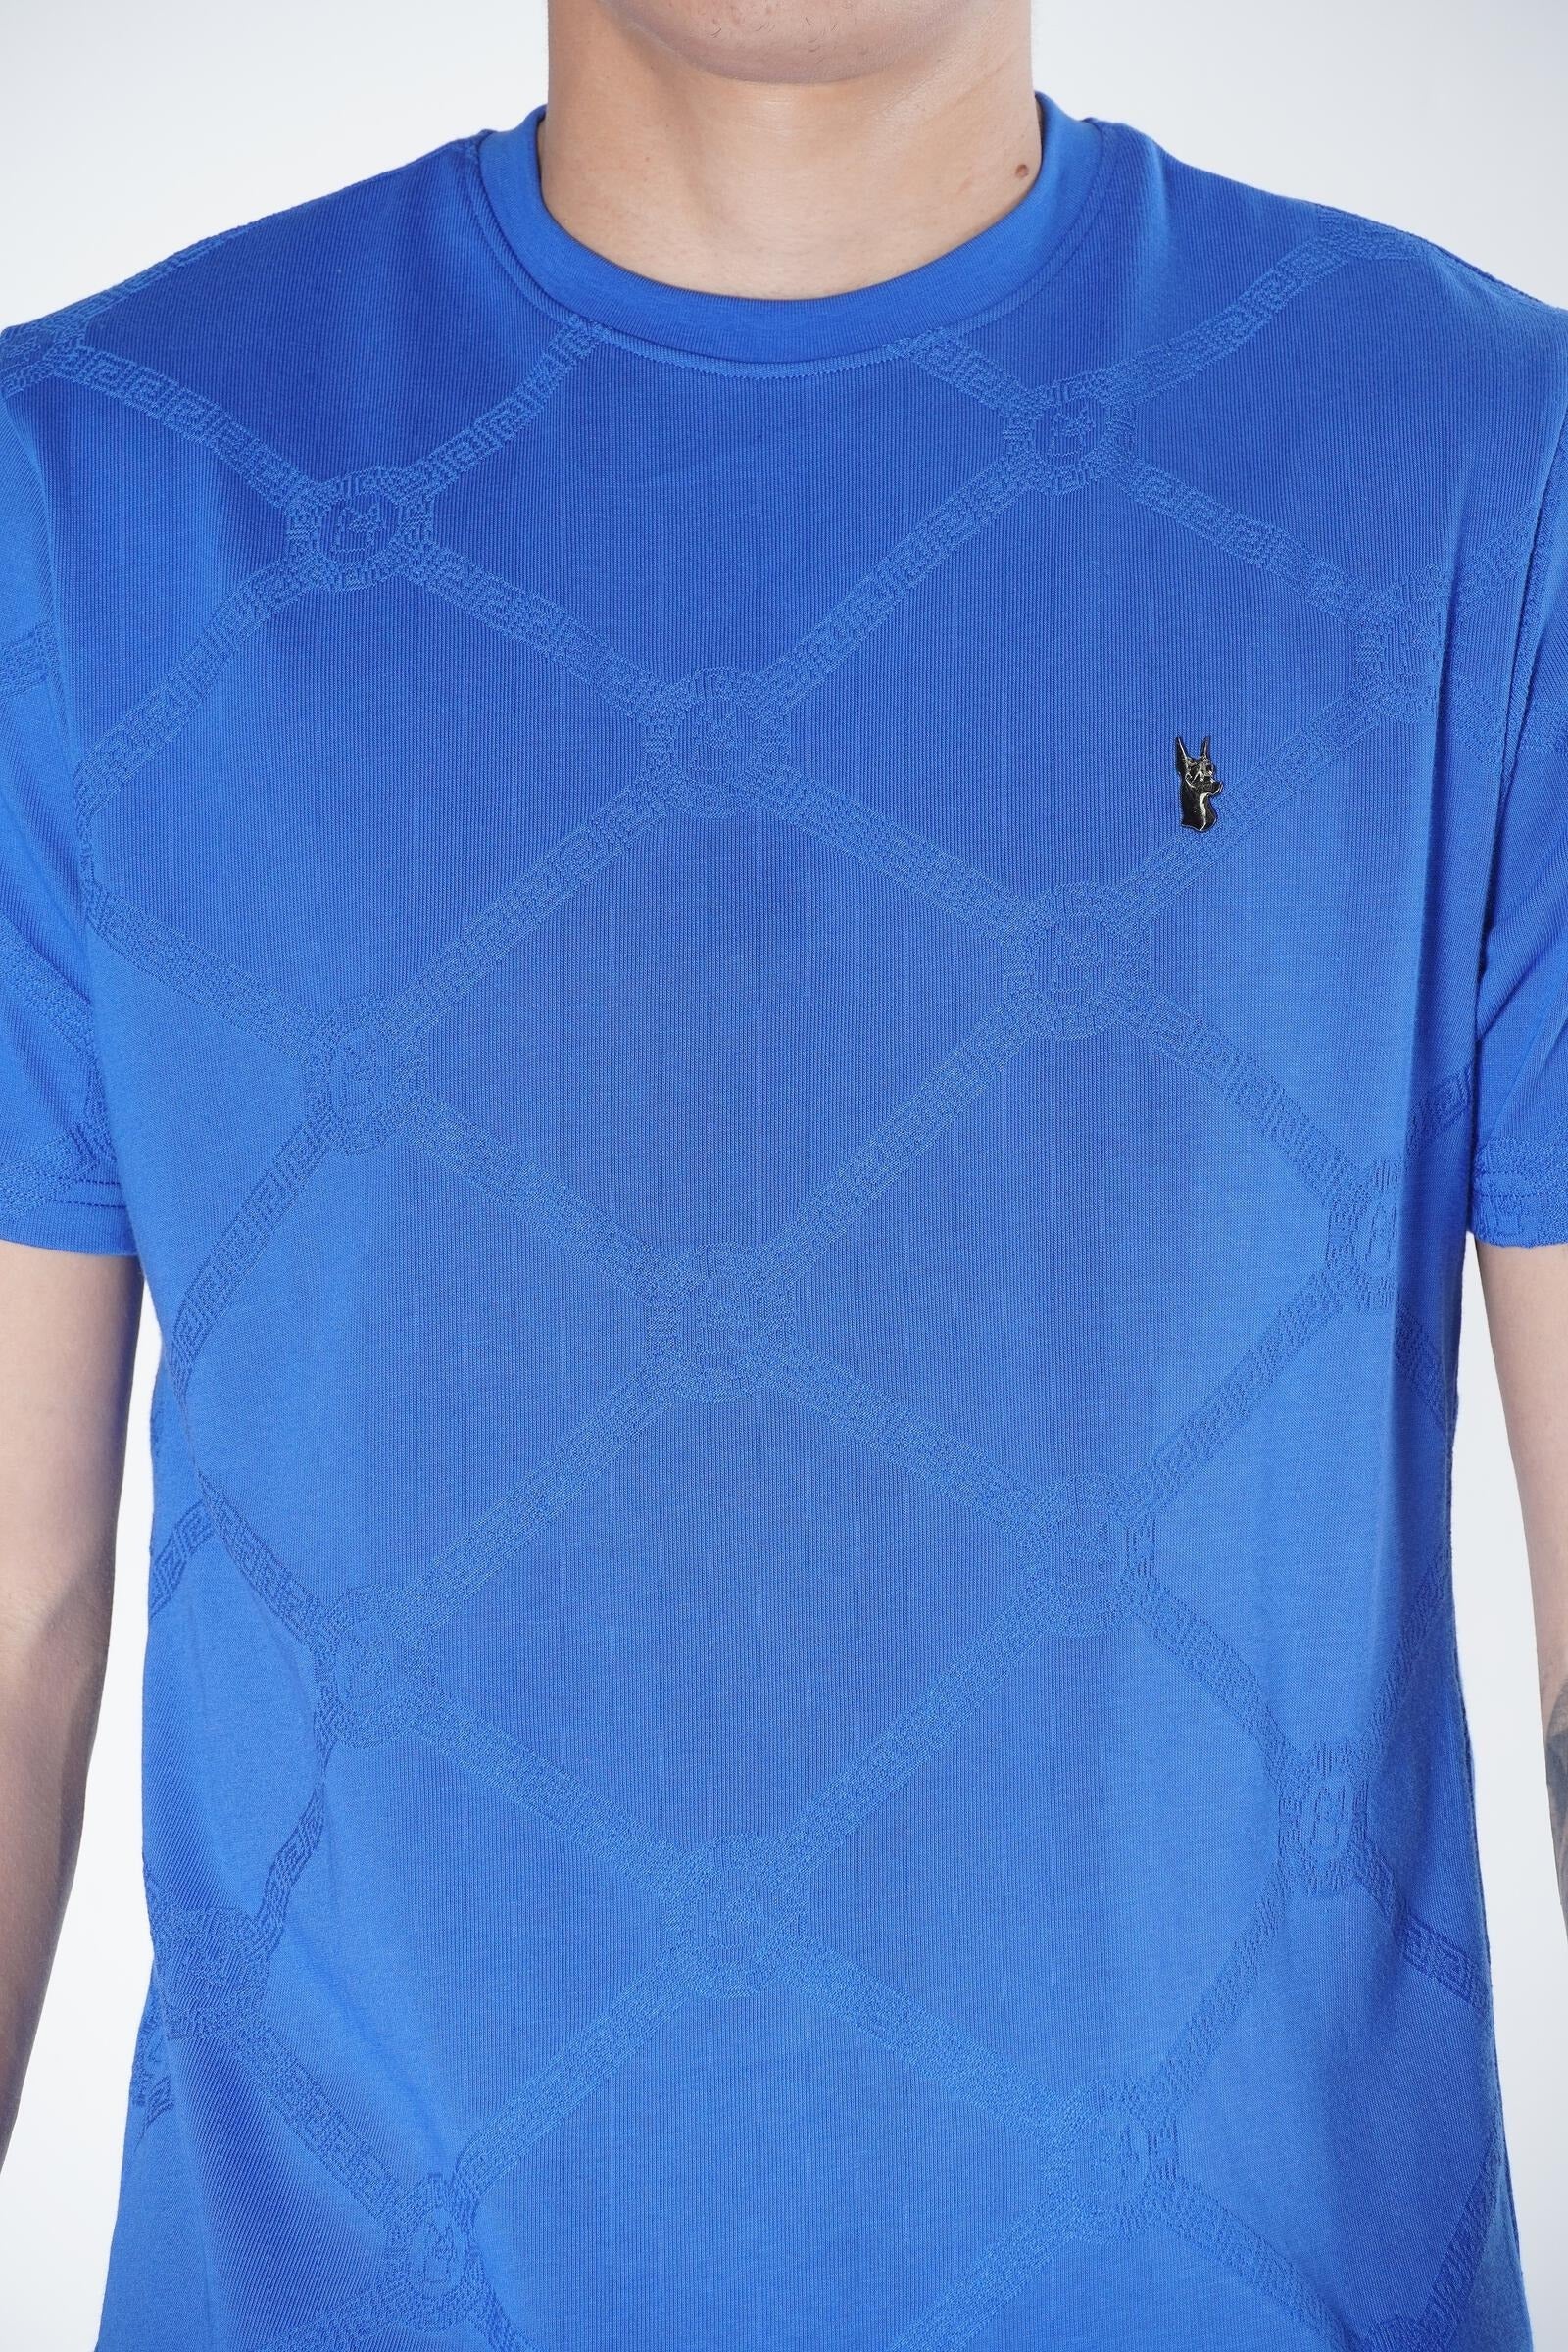 Makobi Big & Tall Tee Shirt - Embossed Knit -M298B